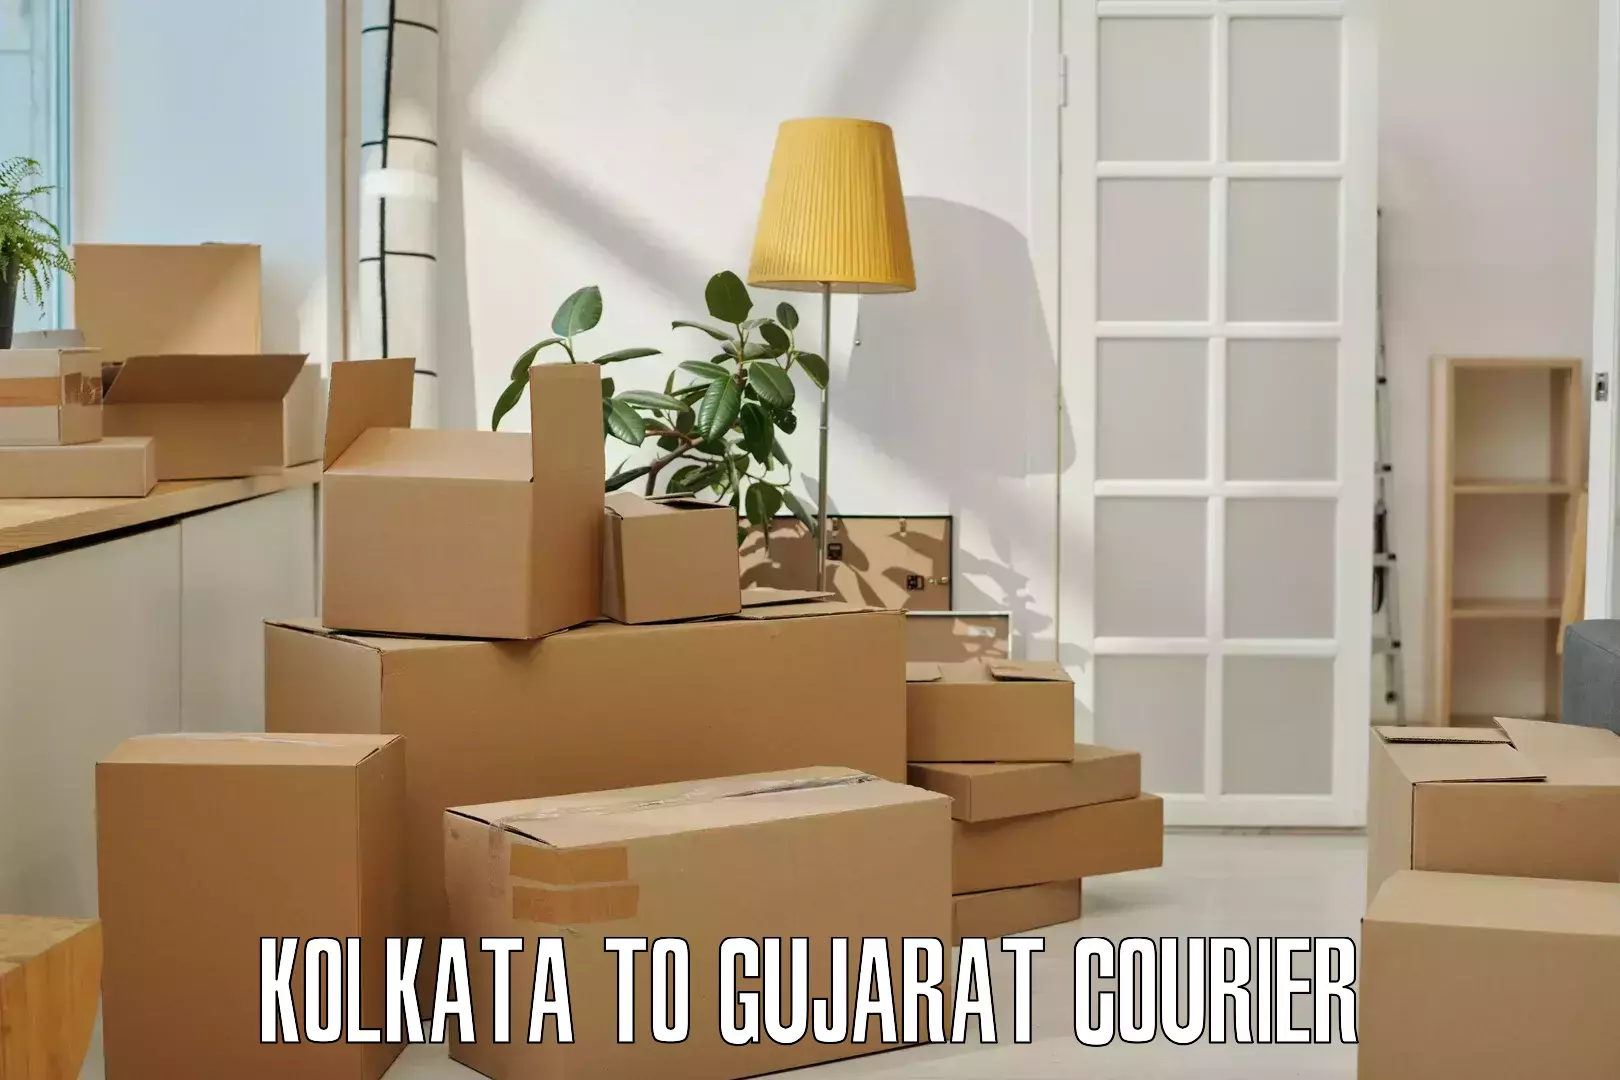 Return courier service Kolkata to Gujarat